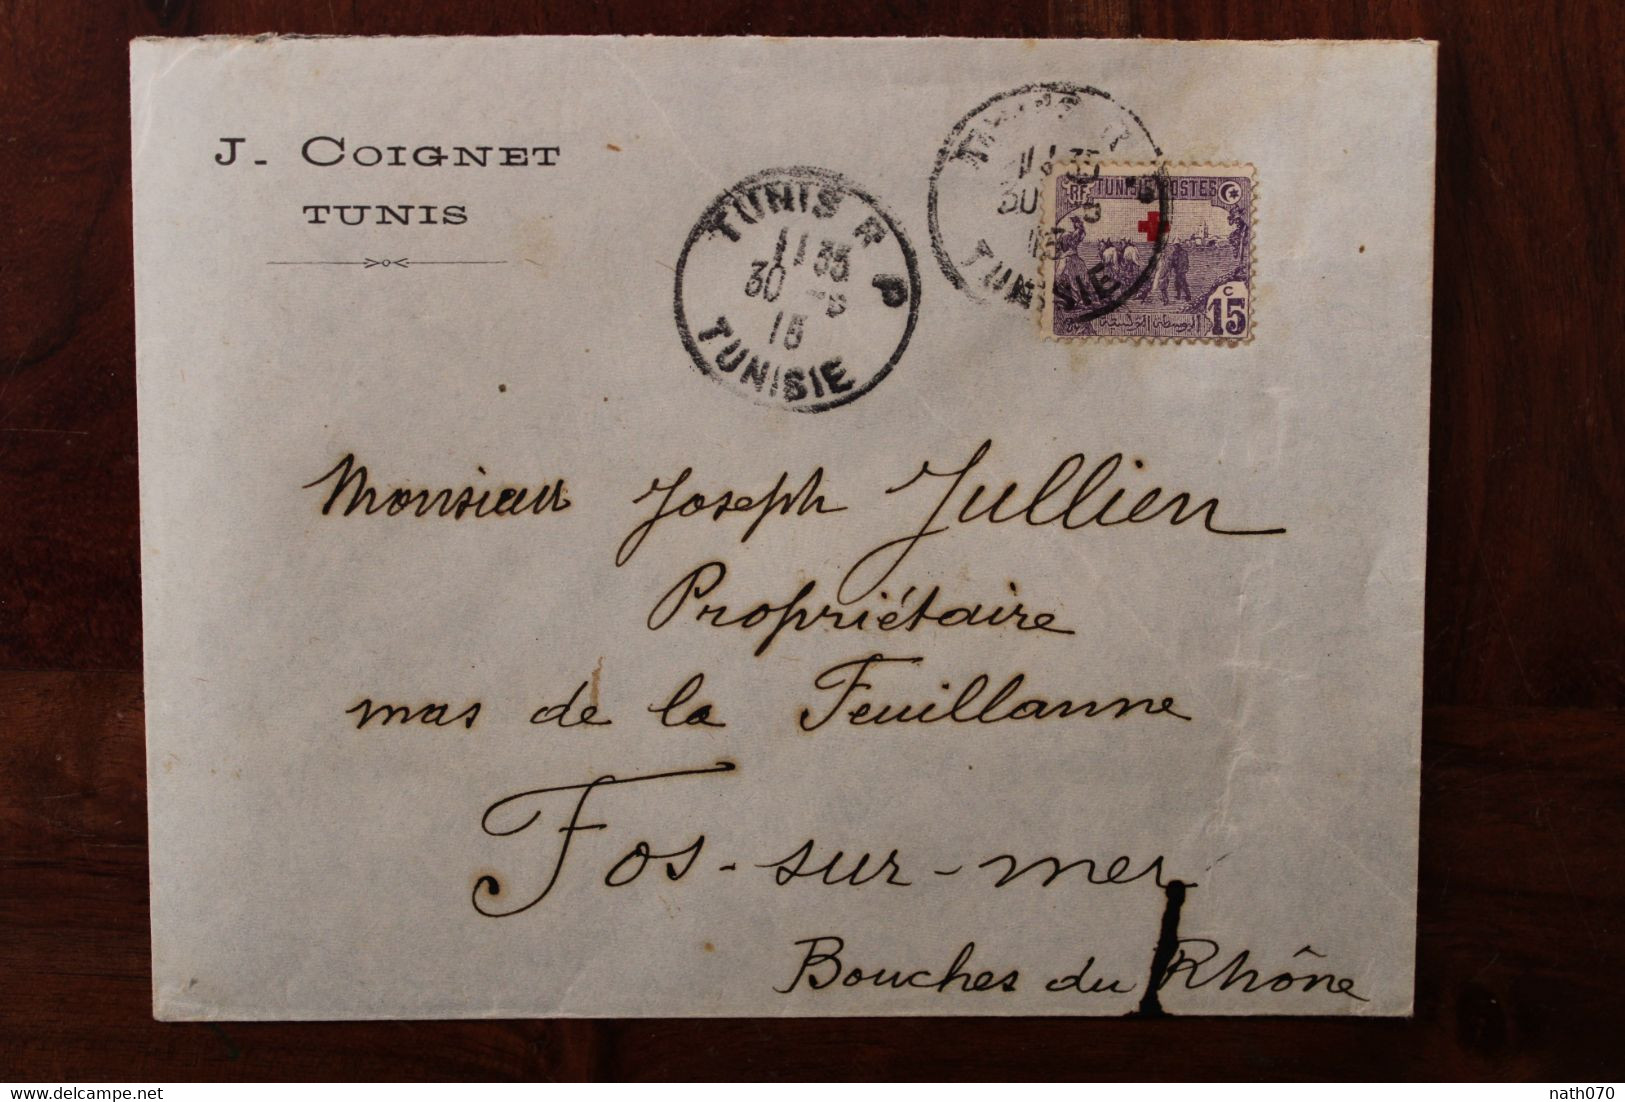 Tunisie 1915 Fos Sur Mer Surcharge Croix Rouge France Cover Colonie Ww1 Wk1 Timbre Seul - Briefe U. Dokumente